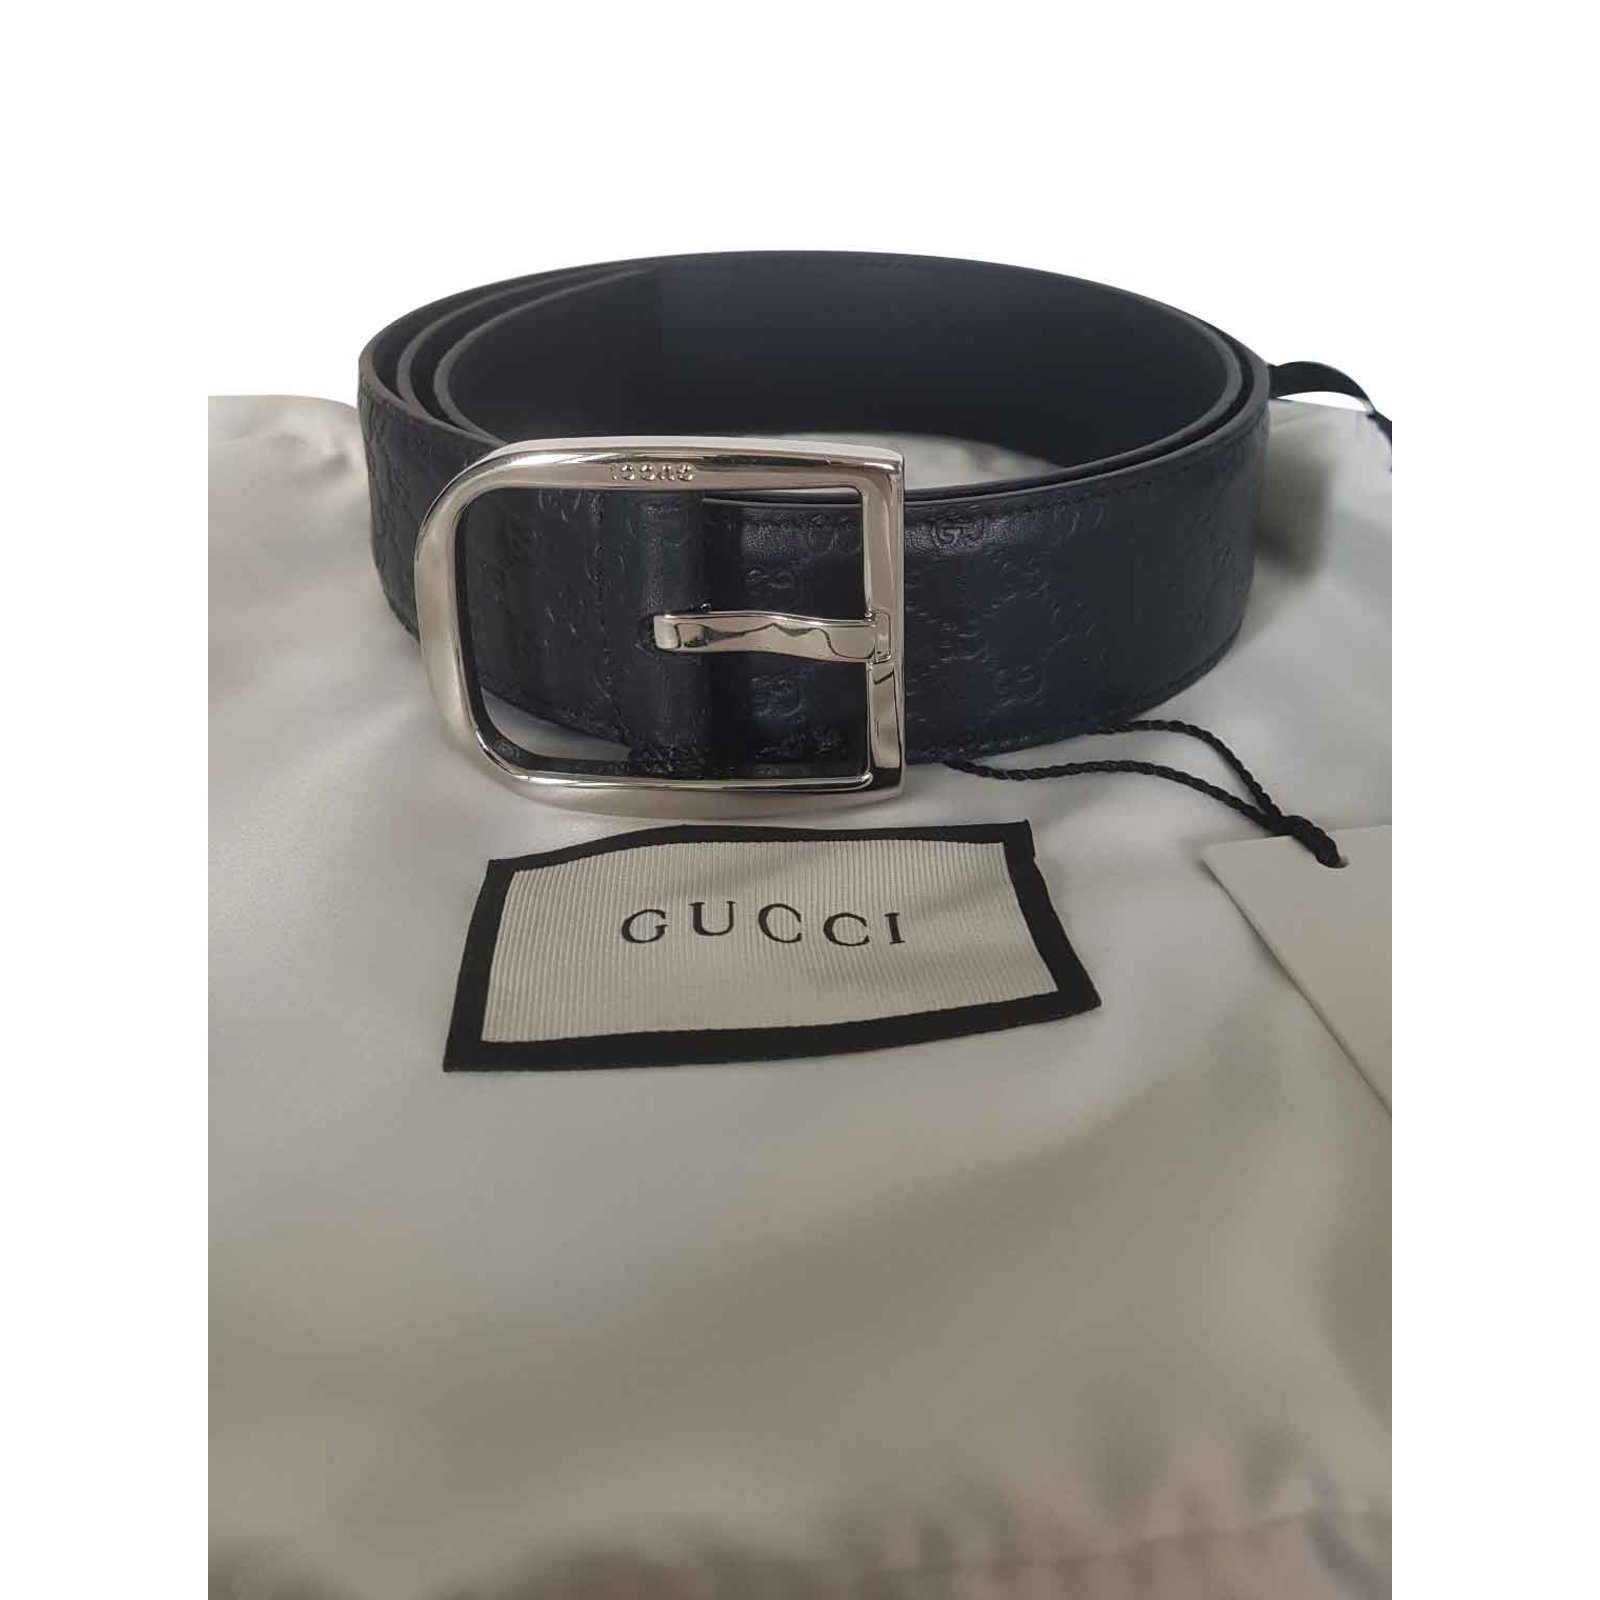 size 95 gucci belt